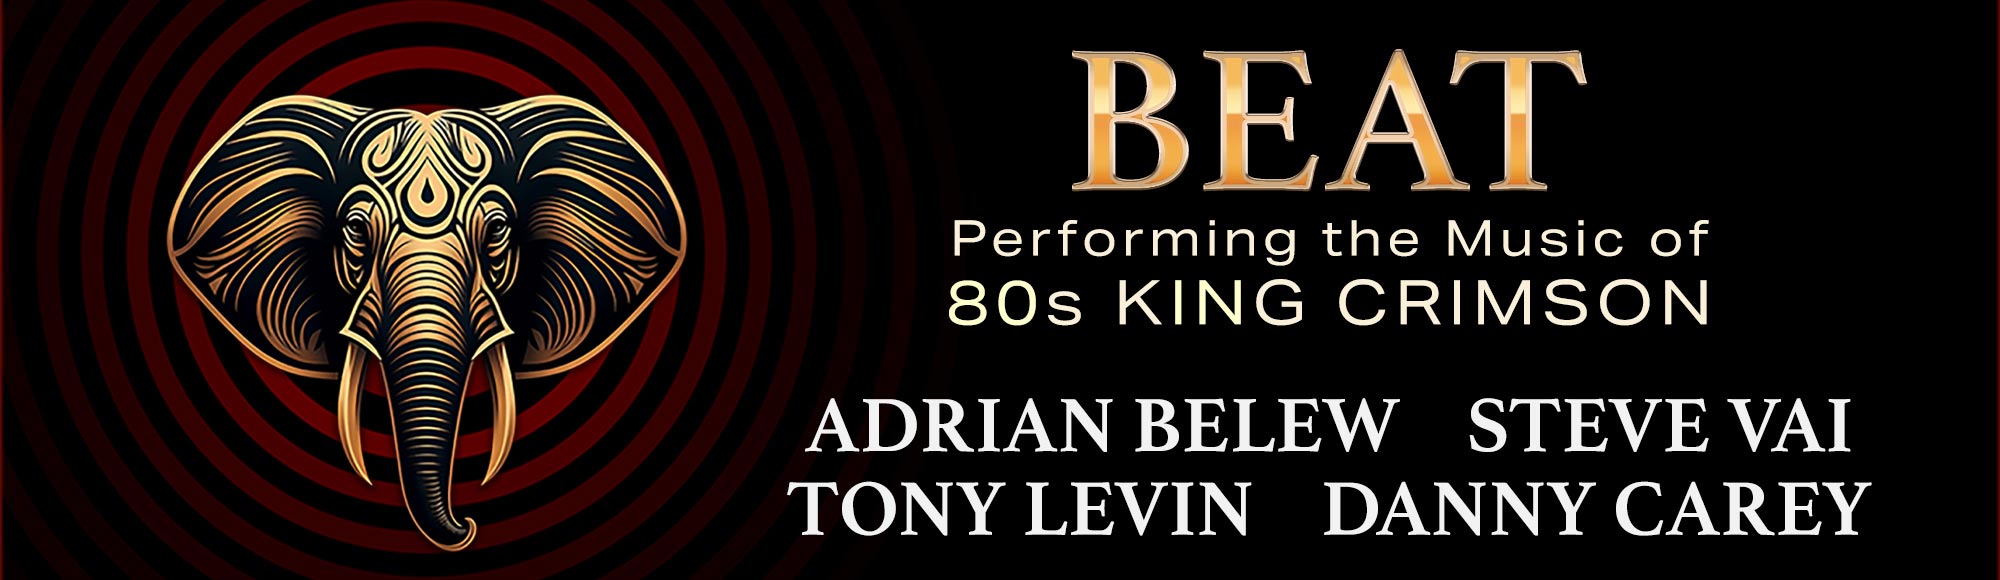 BEAT – Belew, Vai, Levin, Carey Play 80s King Crimson show